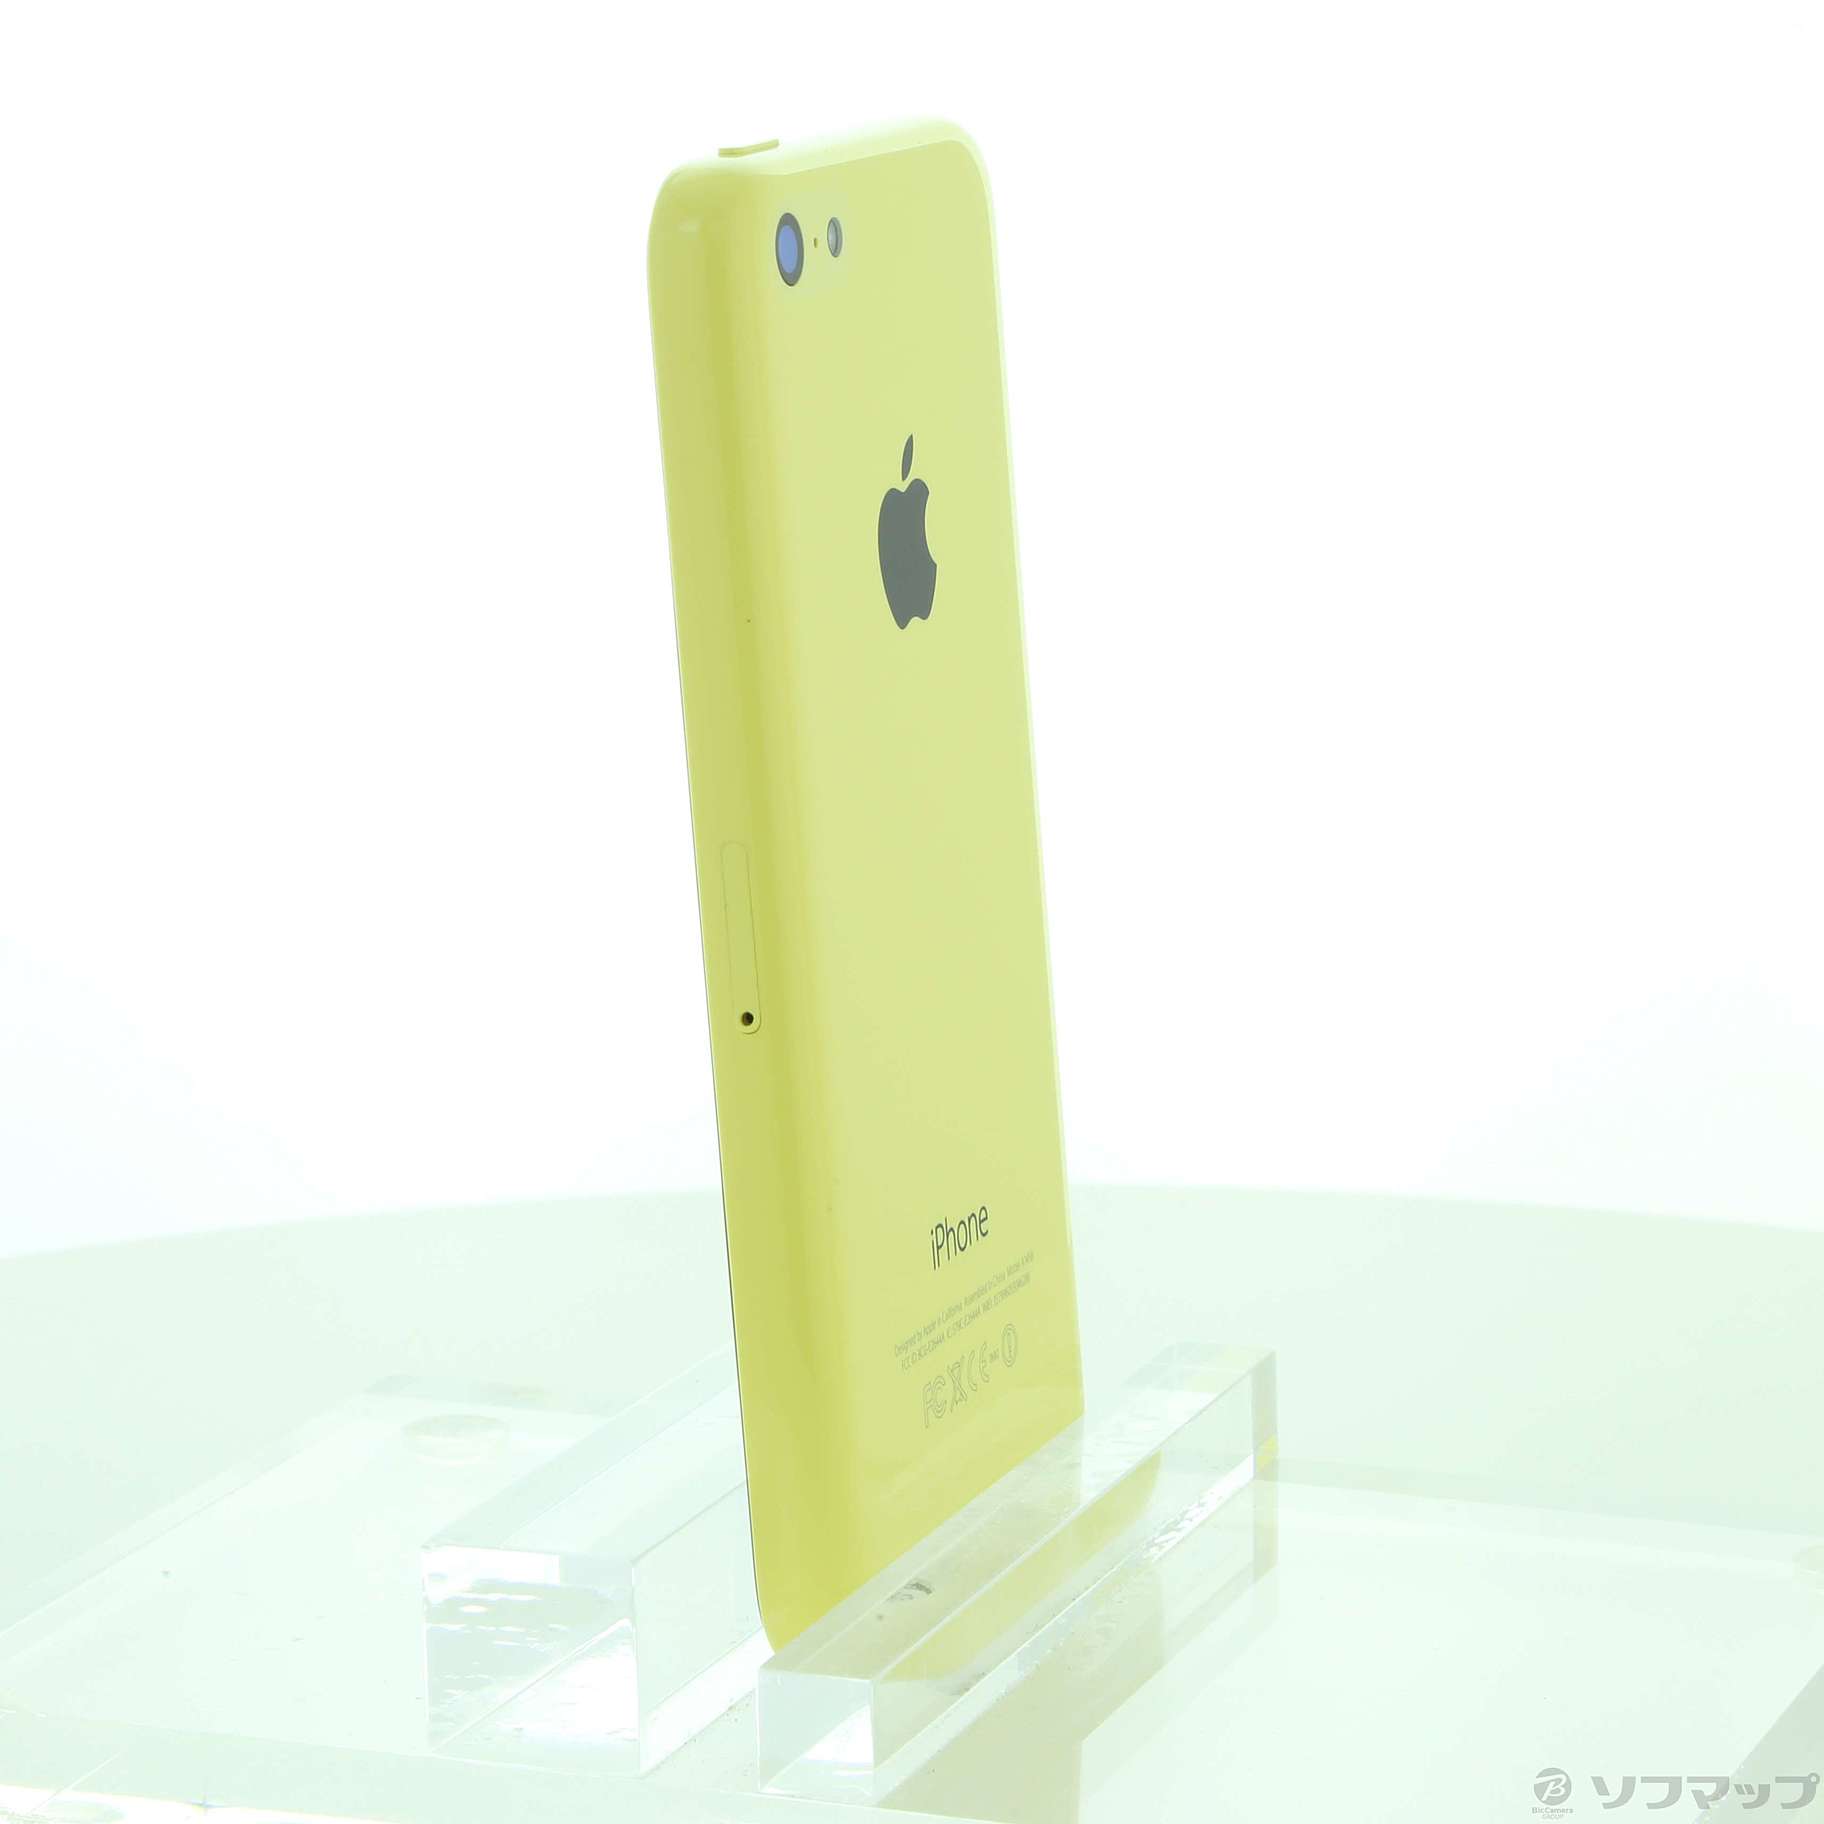 iPhone 5c Yellow 16 GB Softbank